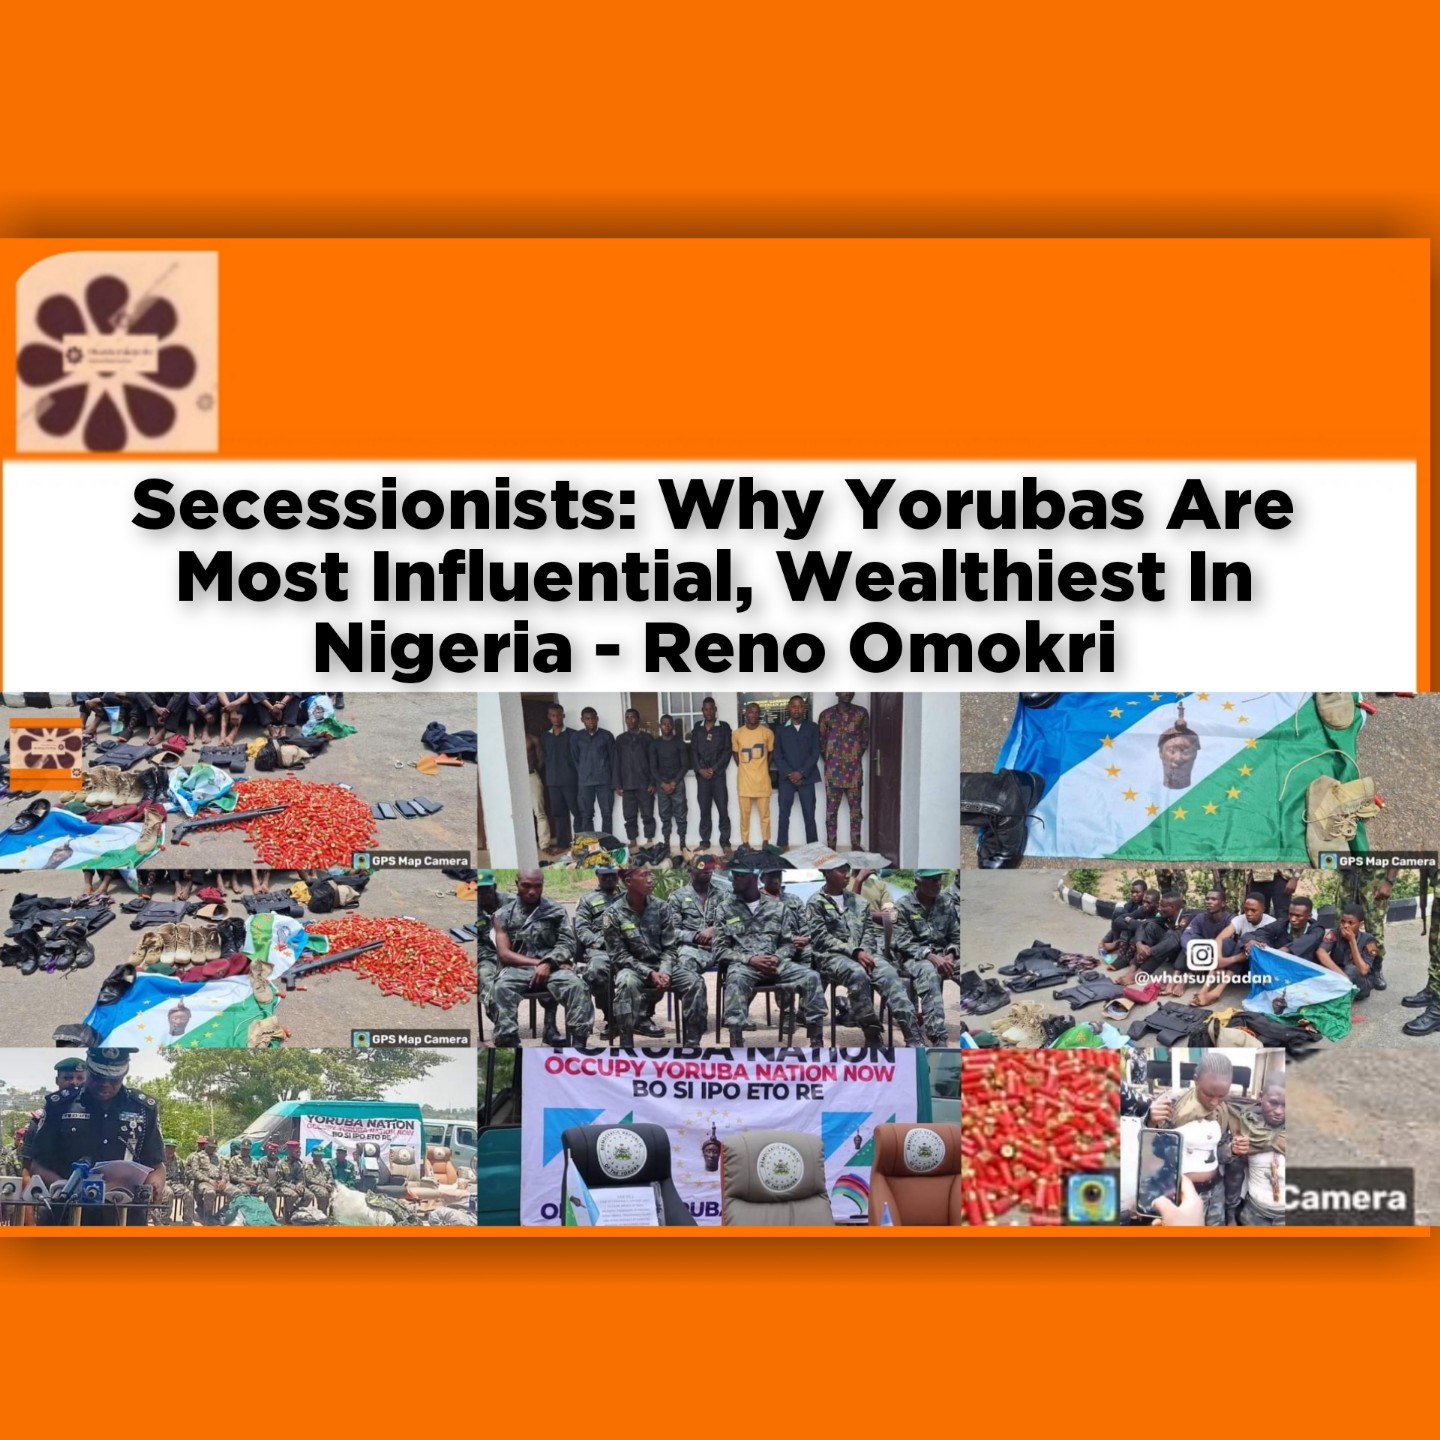 Secessionists: Why Yorubas Are Most Influential, Wealthiest In Nigeria - Reno Omokri ~ OsazuwaAkonedo #Lagos